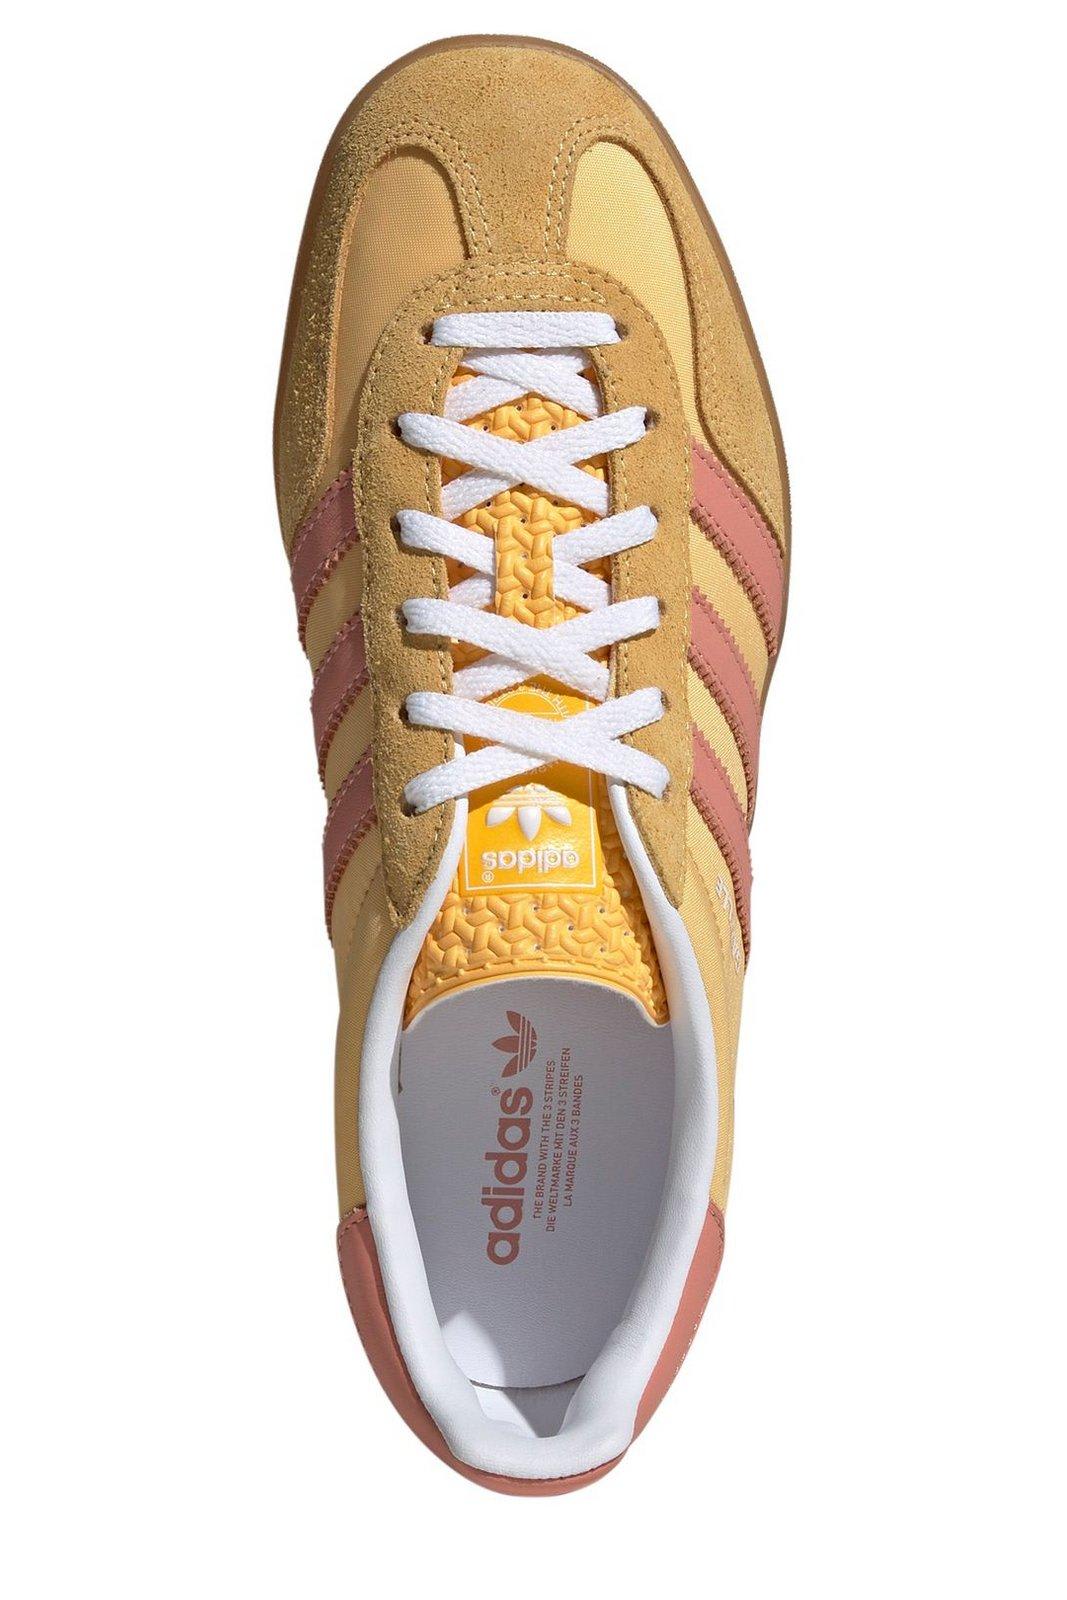 Shop Adidas Originals Gazelle Indoor Lace-up Sneakers In Yellow Pink